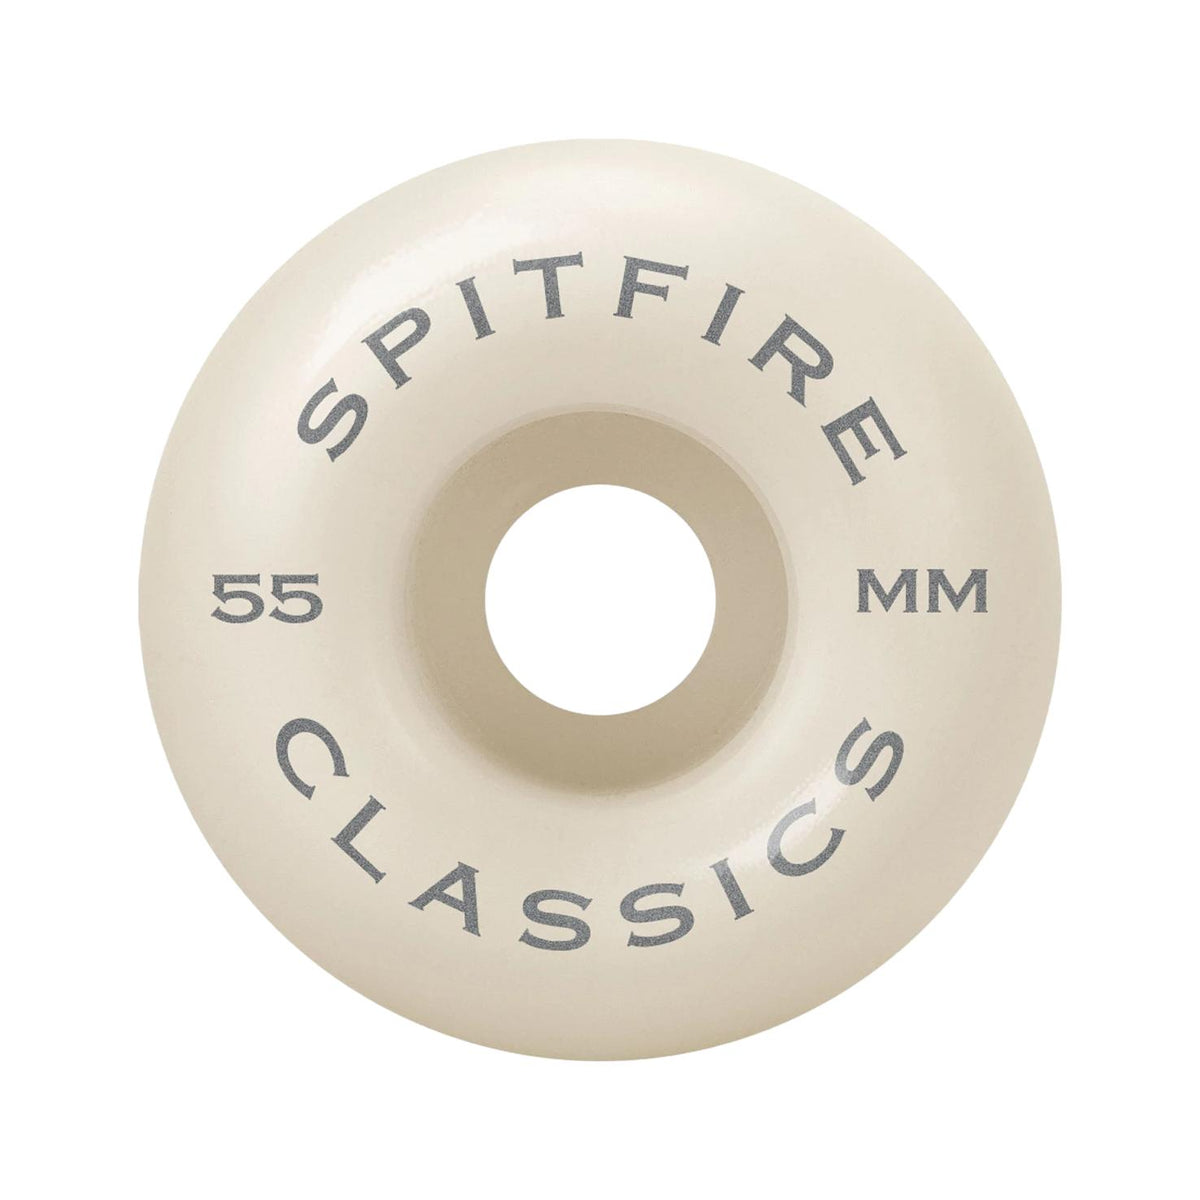 Spitfire Classic 55mm Wheels - Venue Skateboards